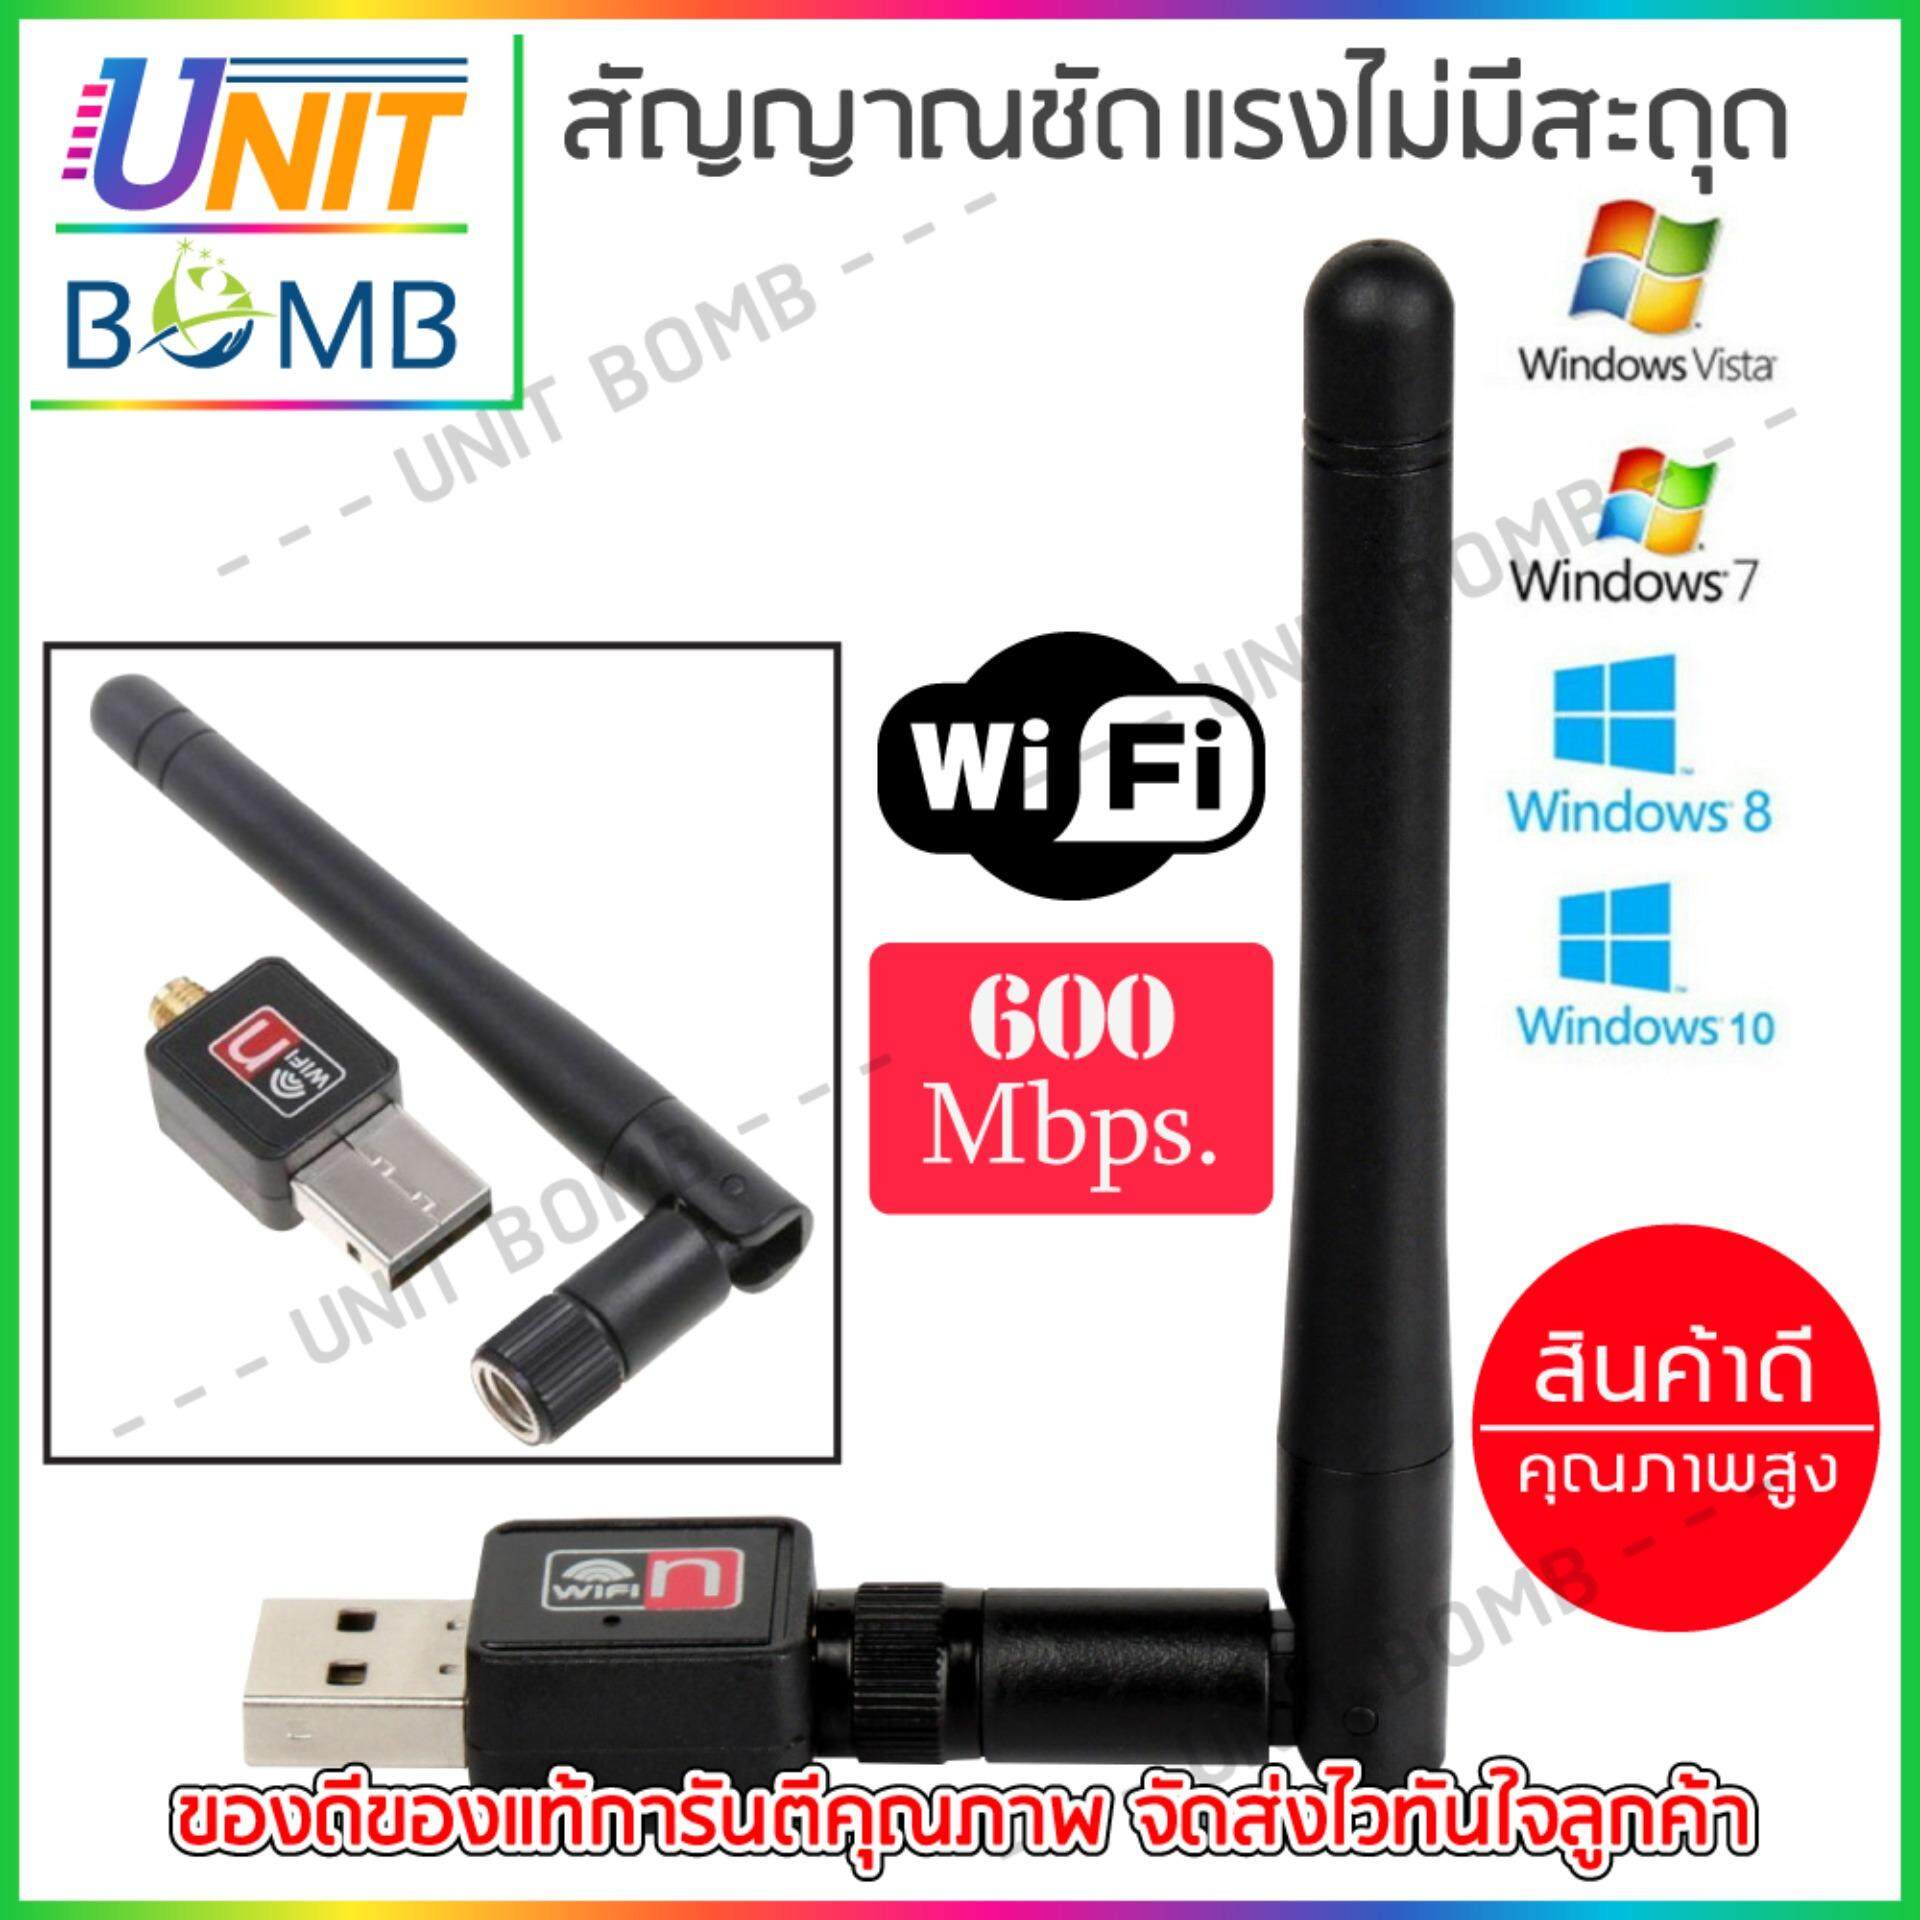 UNITBOMB ตัวรับสัญญาณไวไฟ USB 600Mbps แบบมีเสาอากาศ ตัวรับ WIFI สำหรับคอมพิวเตอร์ โน้ตบุ๊ค แล็ปท็อป รับไวไฟ เสาไวไฟความเร็วสูง ขนาดเล็กกระทัดรัด Mini USB 2.0 Wireless Wifi Adapter 802.11N 600Mbps